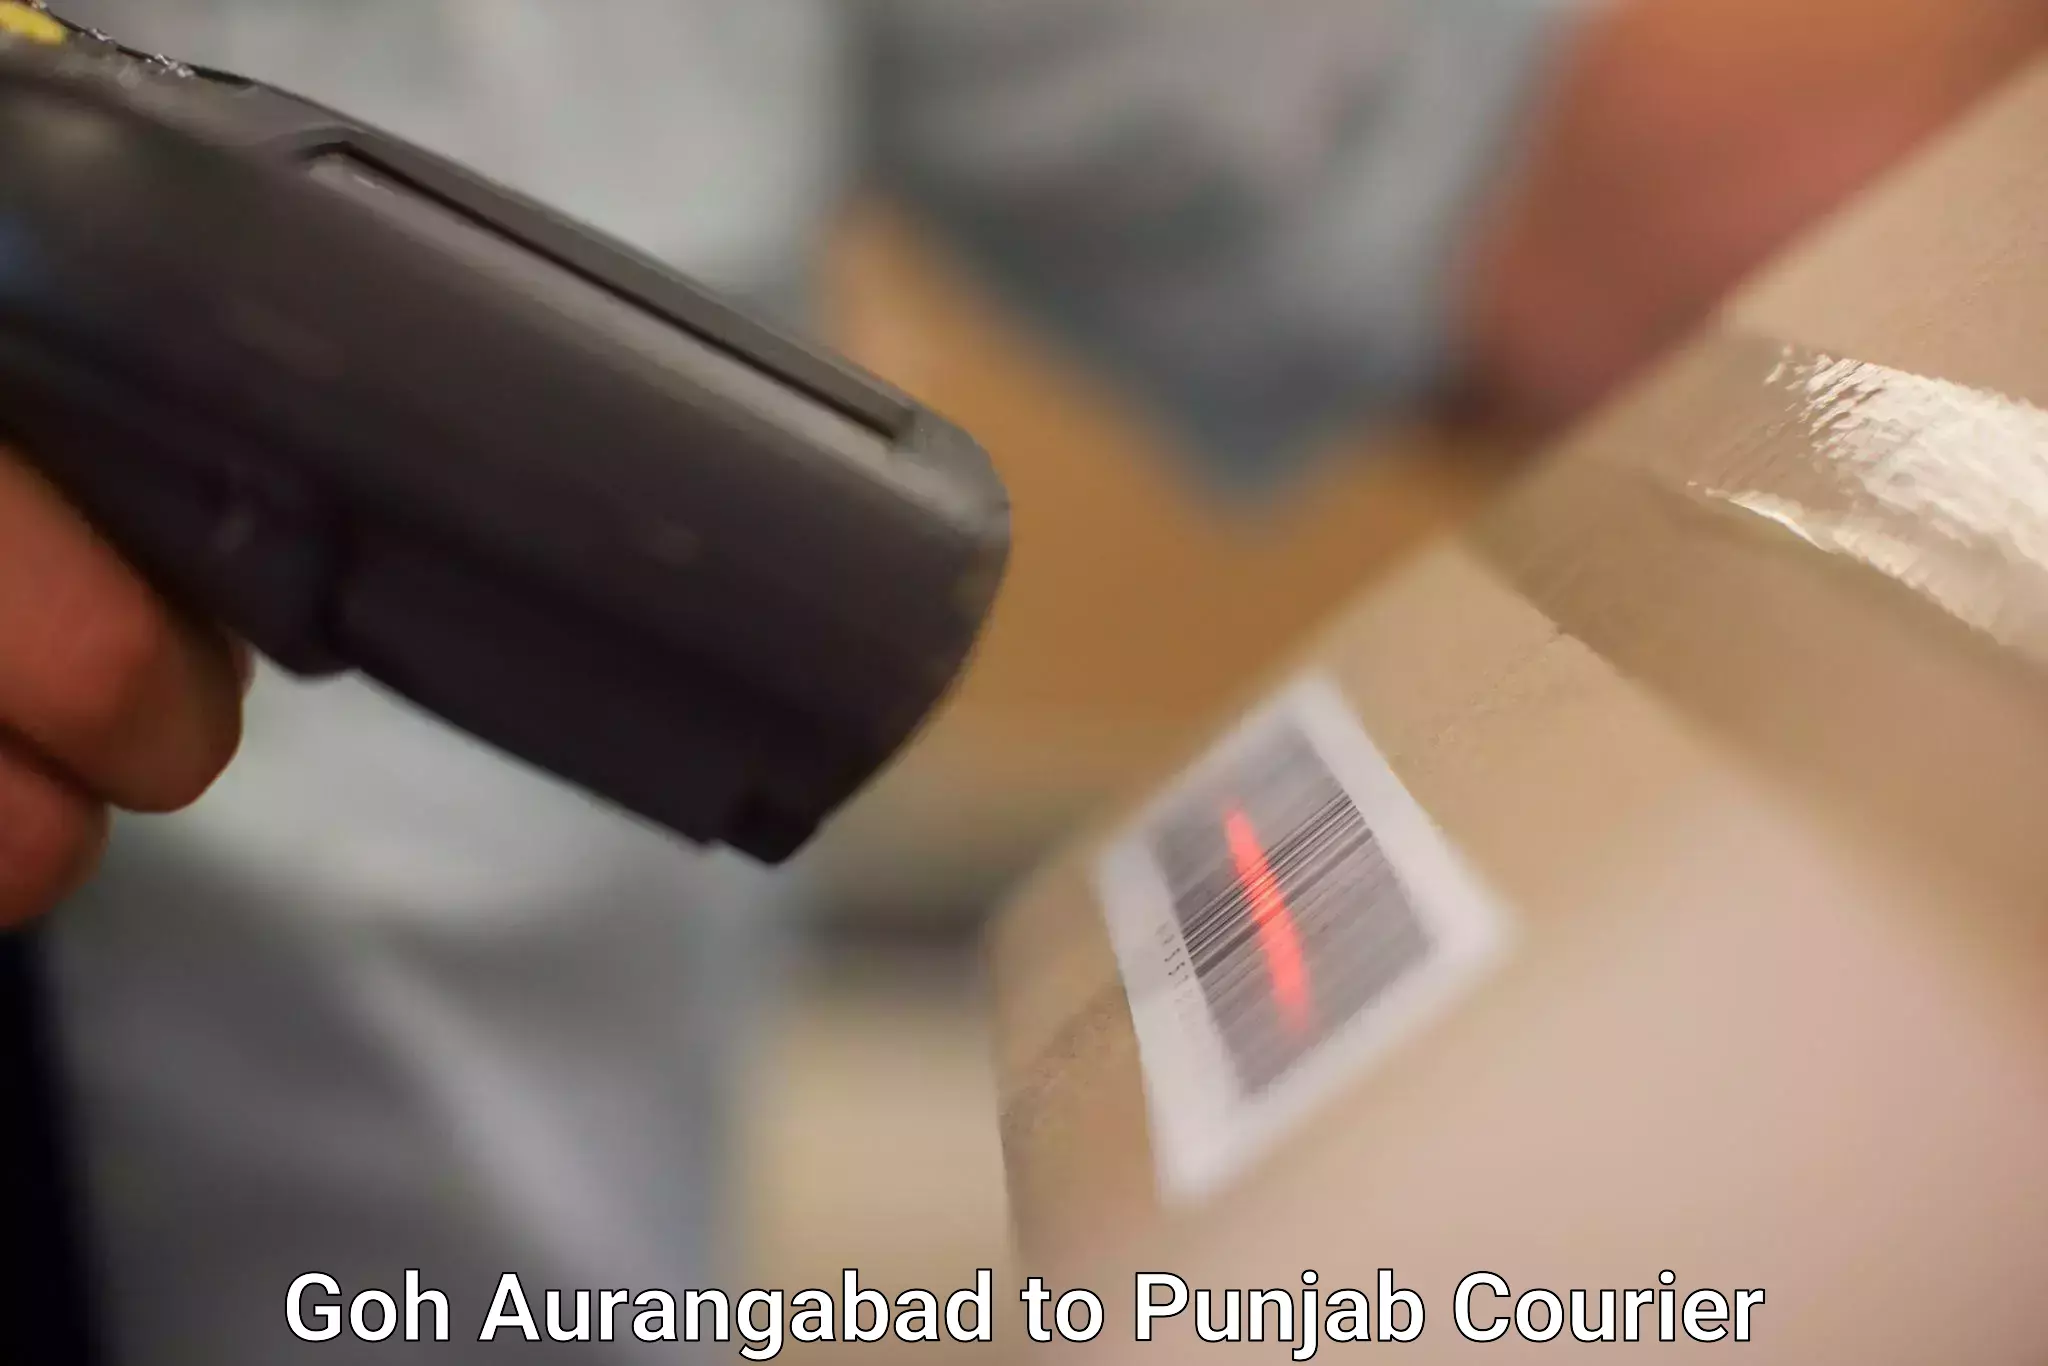 24-hour courier service Goh Aurangabad to Amritsar